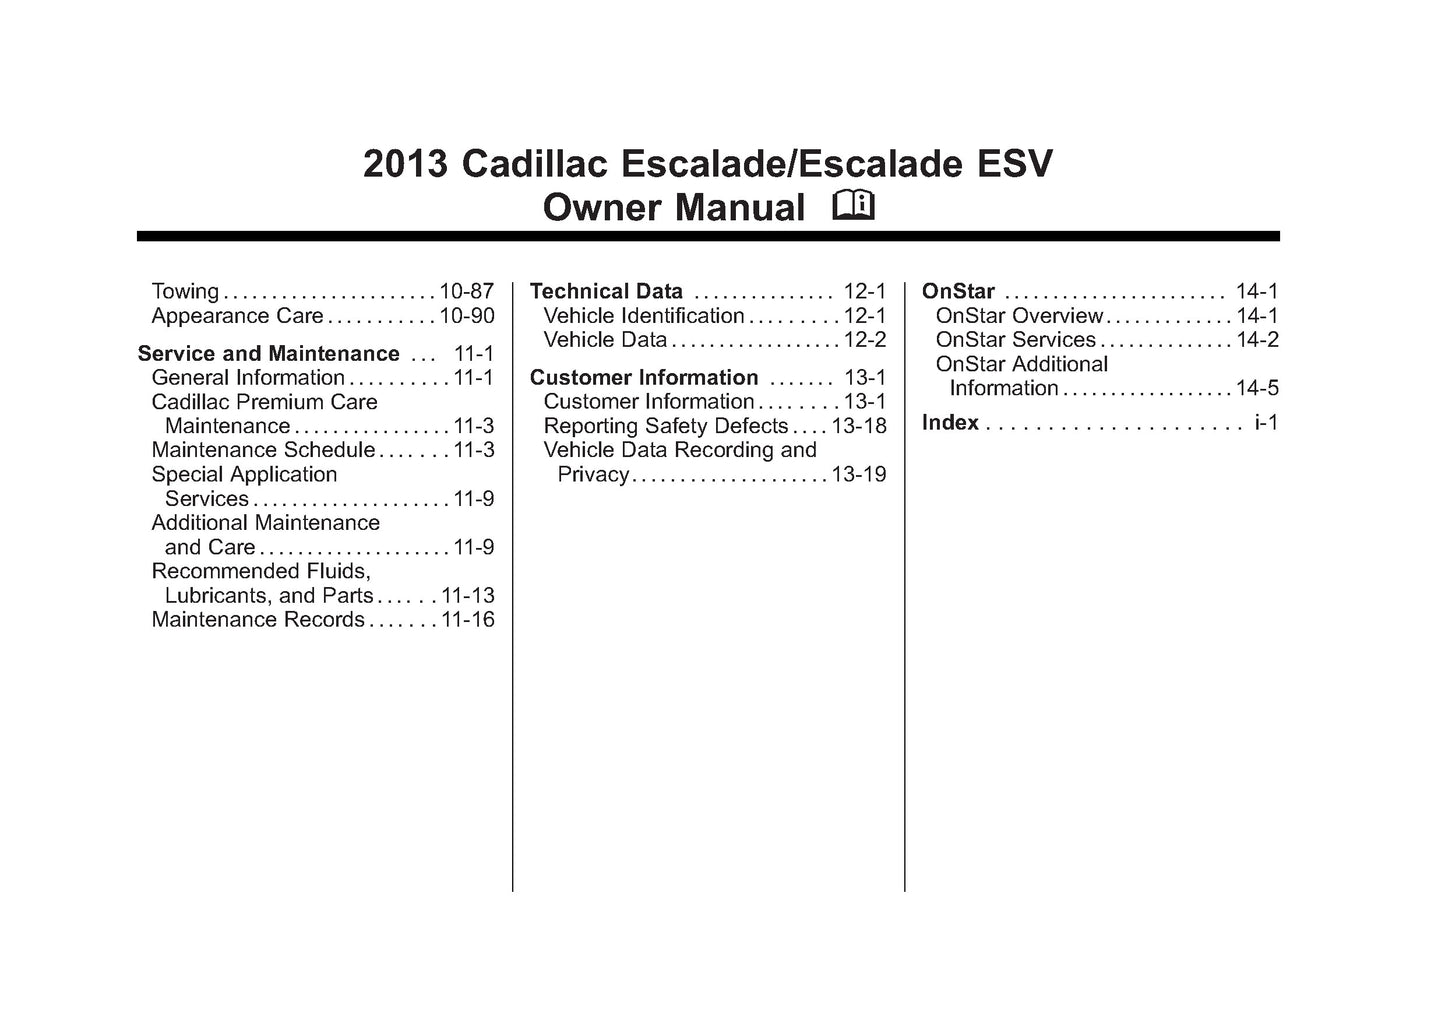 2013 Cadillac Escalade / ESV Bedienungsanleitung | Englisch